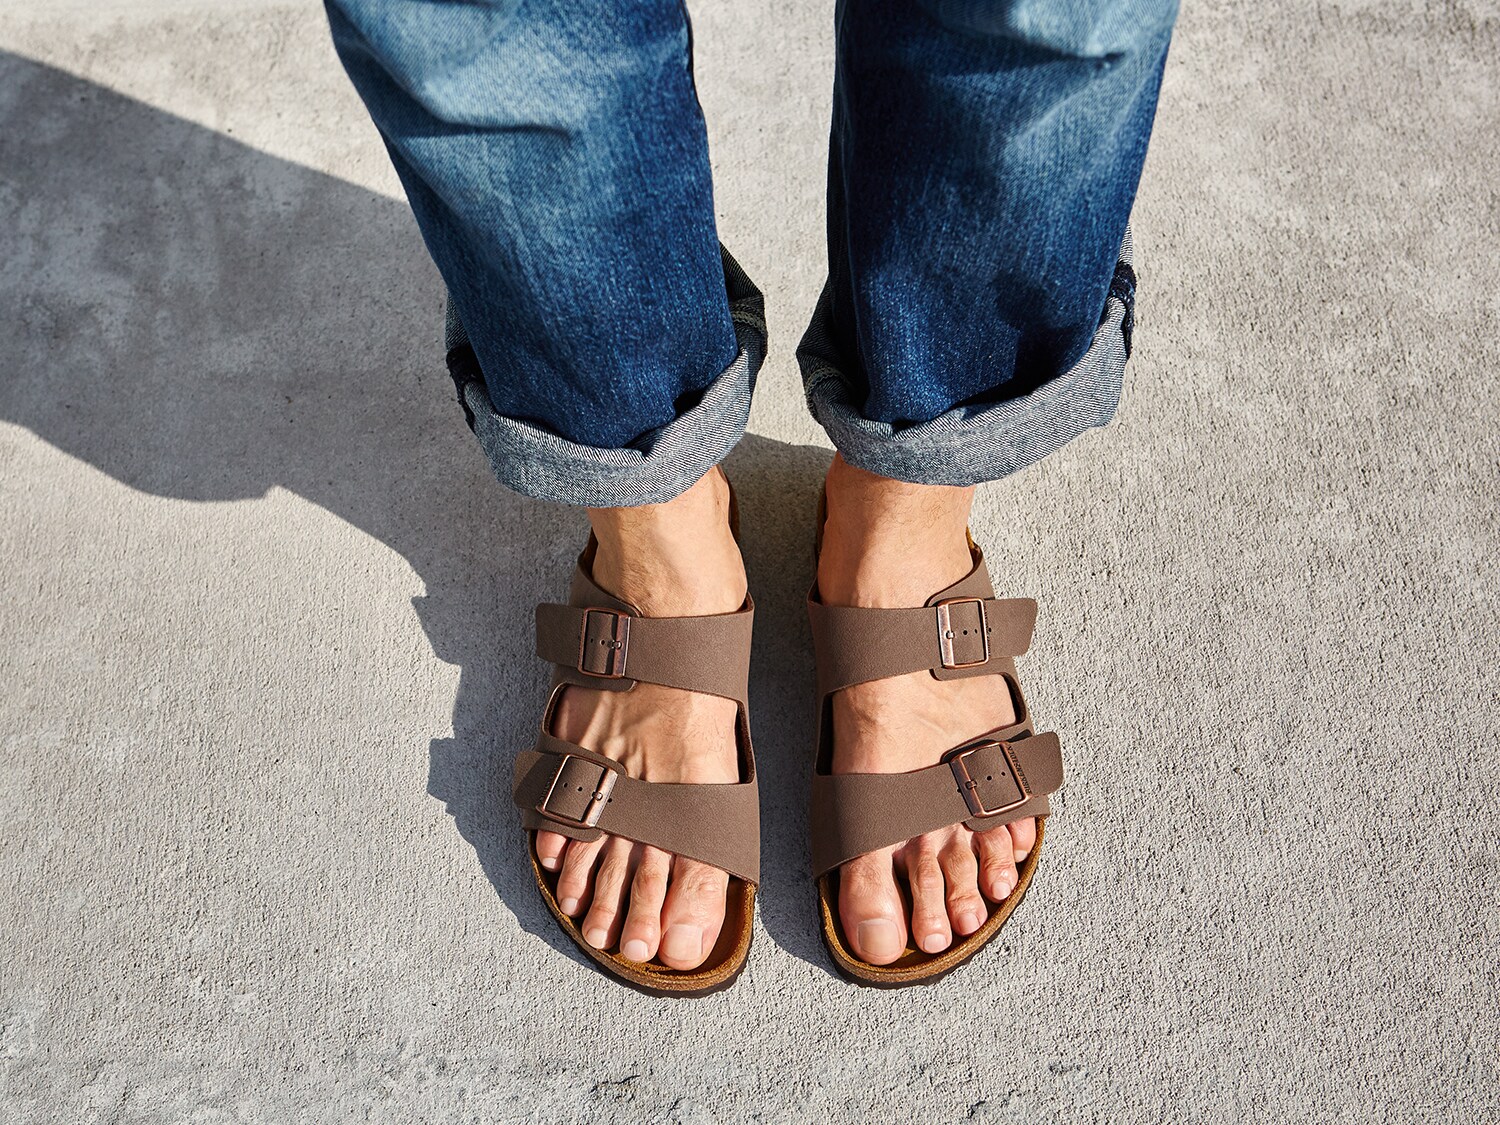 Birkenstock Arizona Slide Sandal - Men 